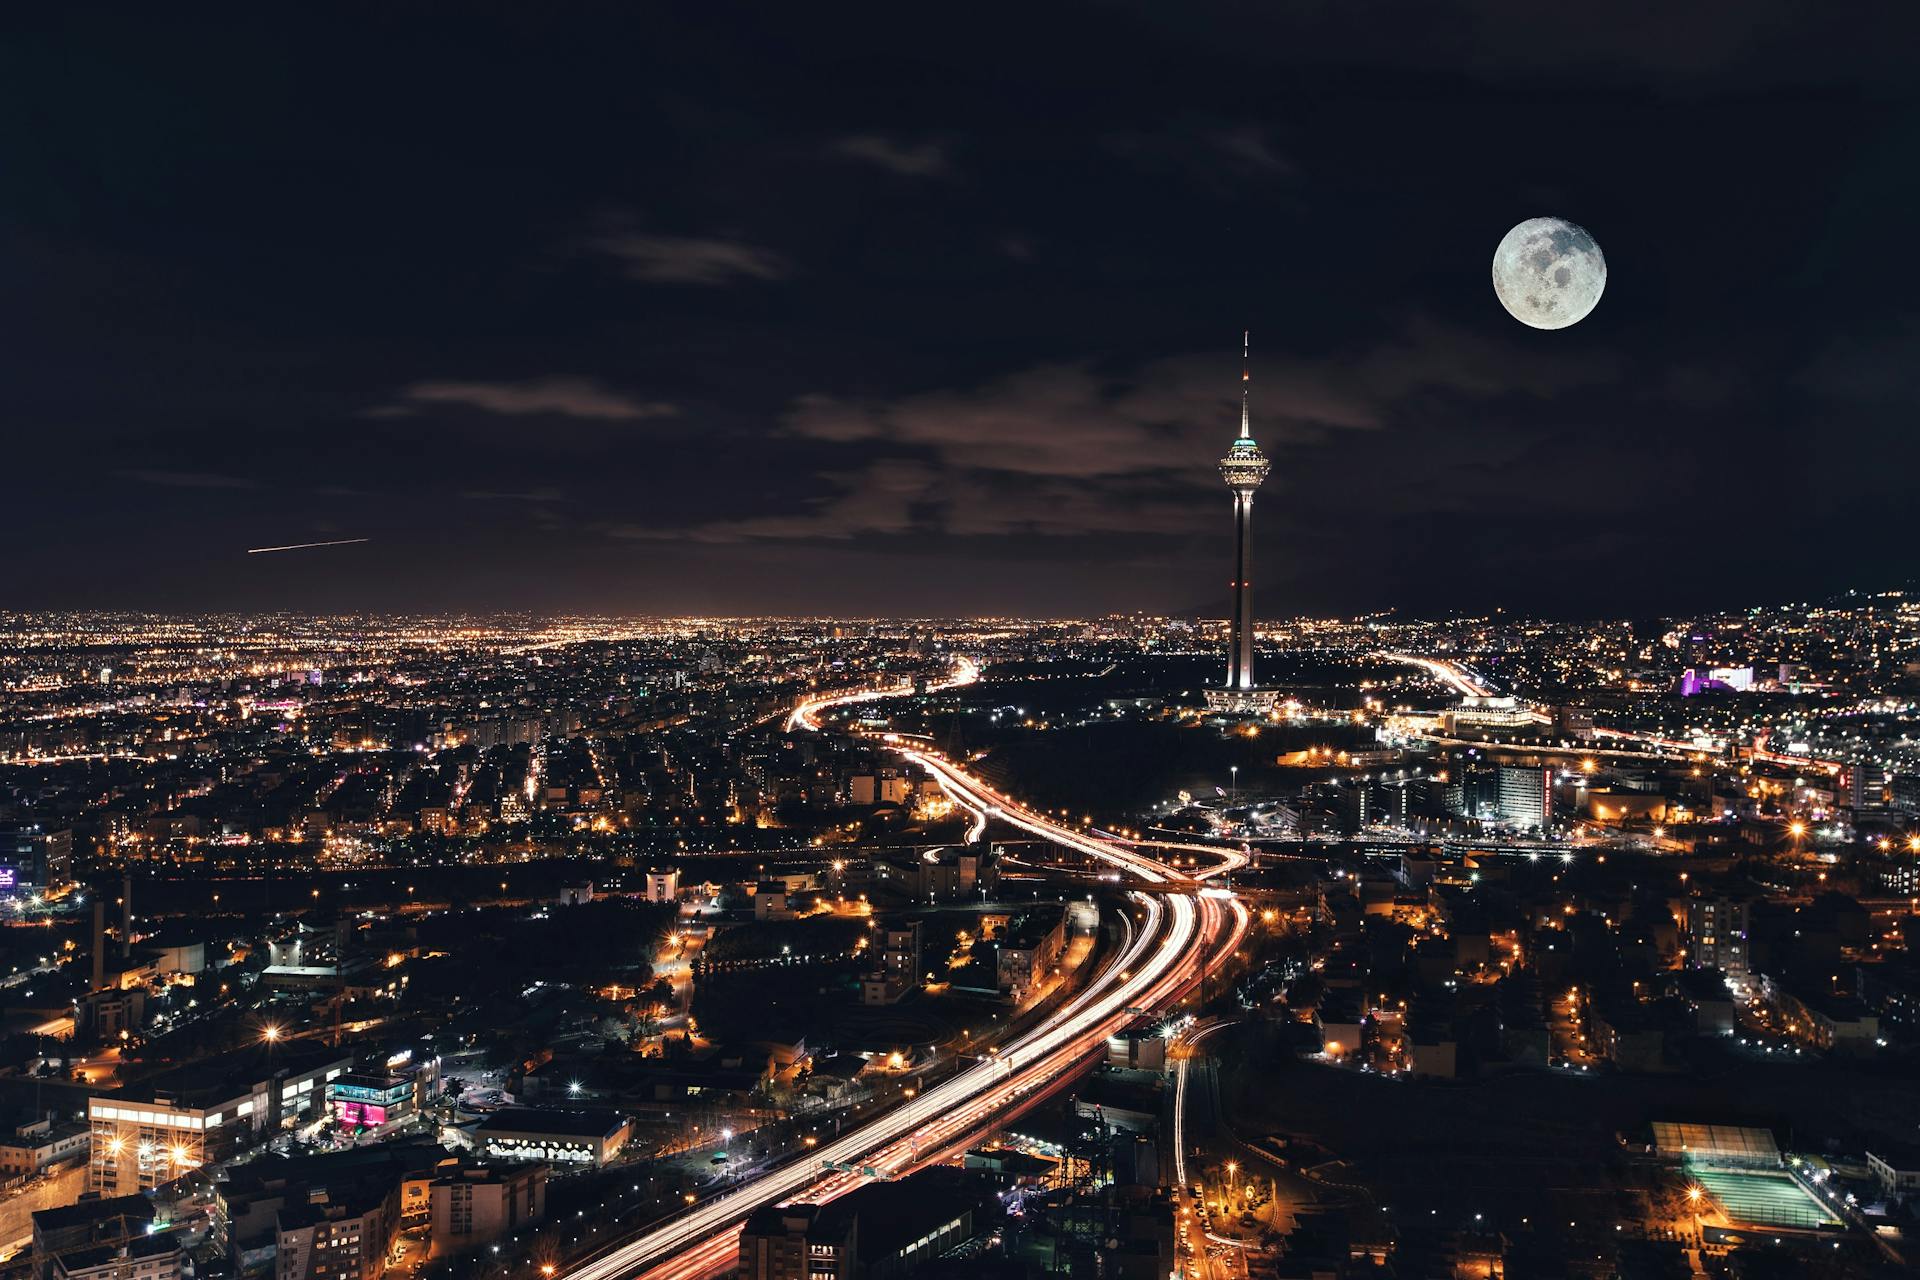 Photo of a City at Night